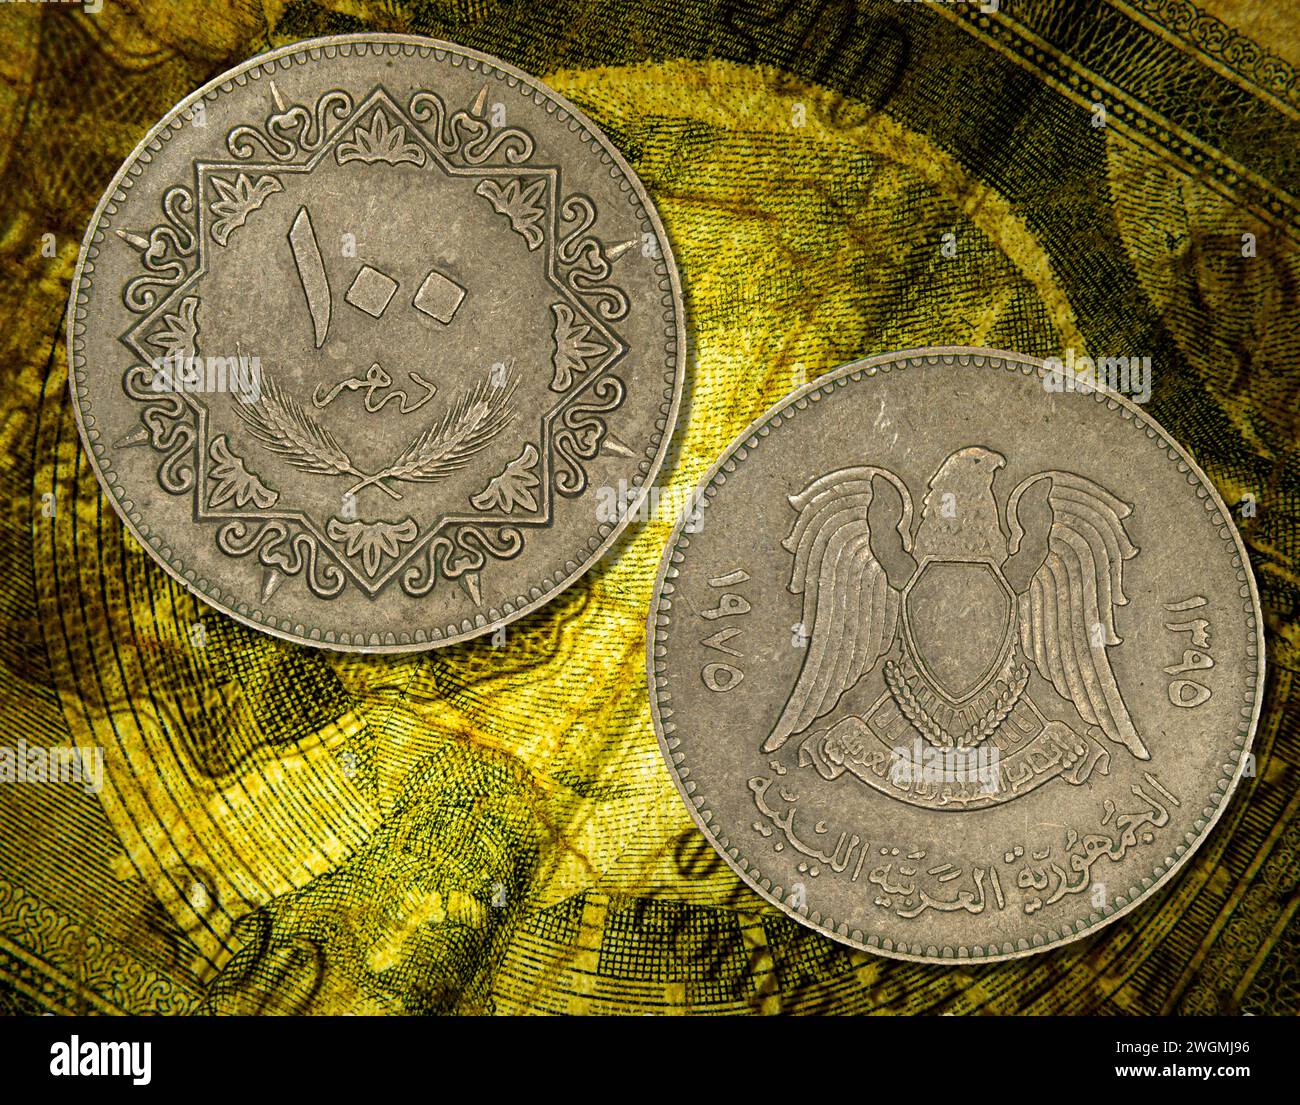 Two vintage Libyan Jamahiriya dinar coins placed on a vibrant yellow background Stock Photo